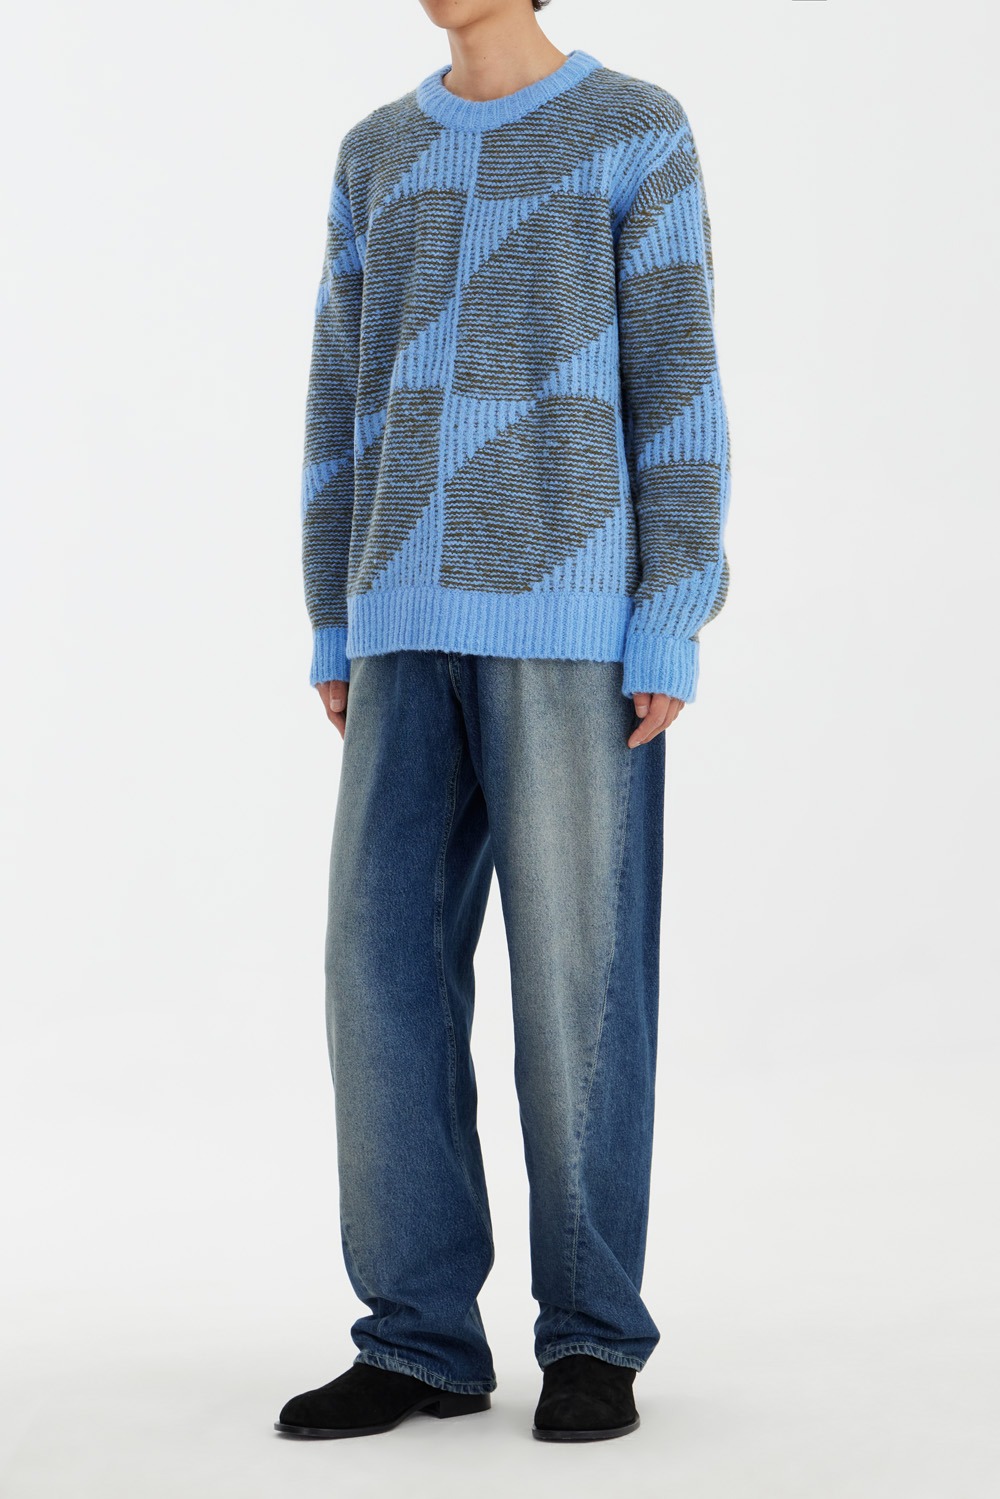 Hexagonal Jacquard Hairley Knitwear - Sky Blue